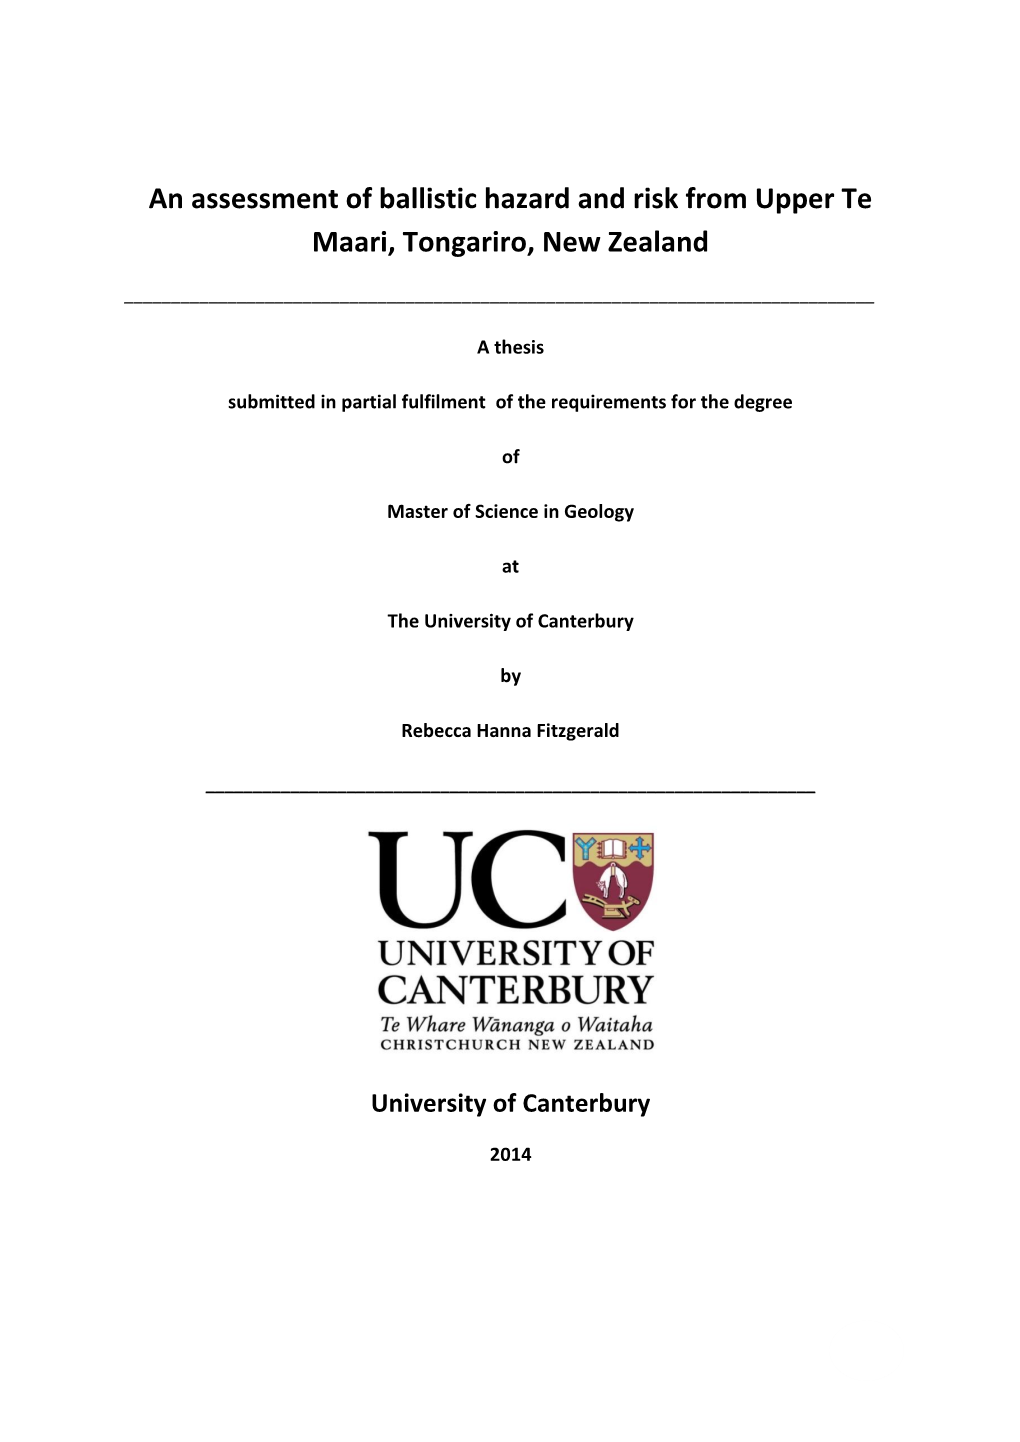 An Assessment of Ballistic Hazard and Risk from Upper Te Maari, Tongariro, New Zealand